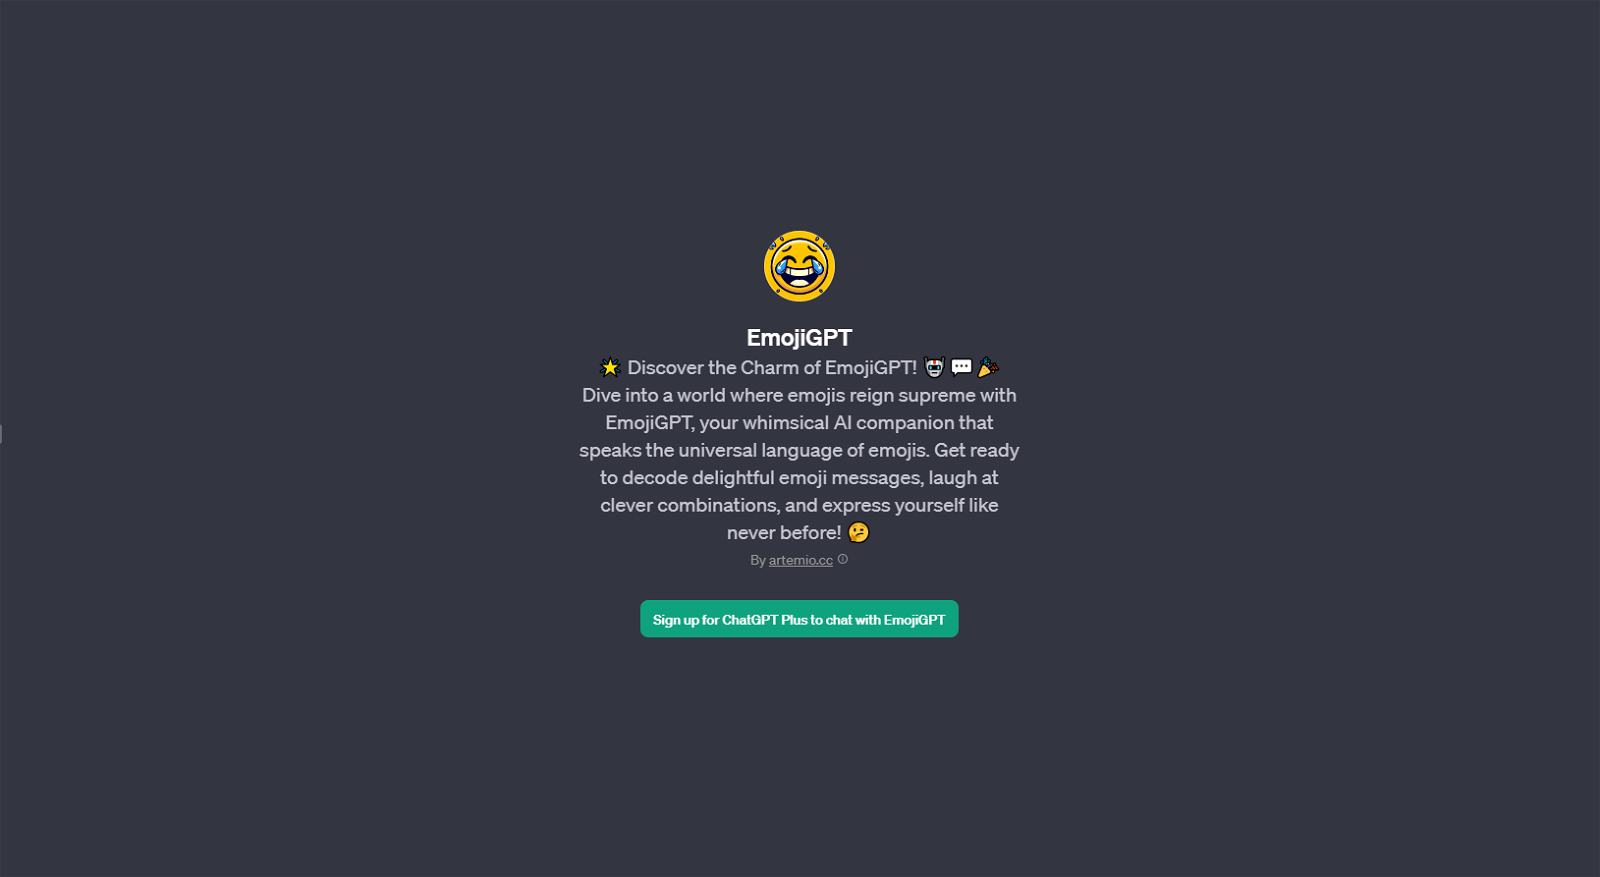 EmojiGPT website